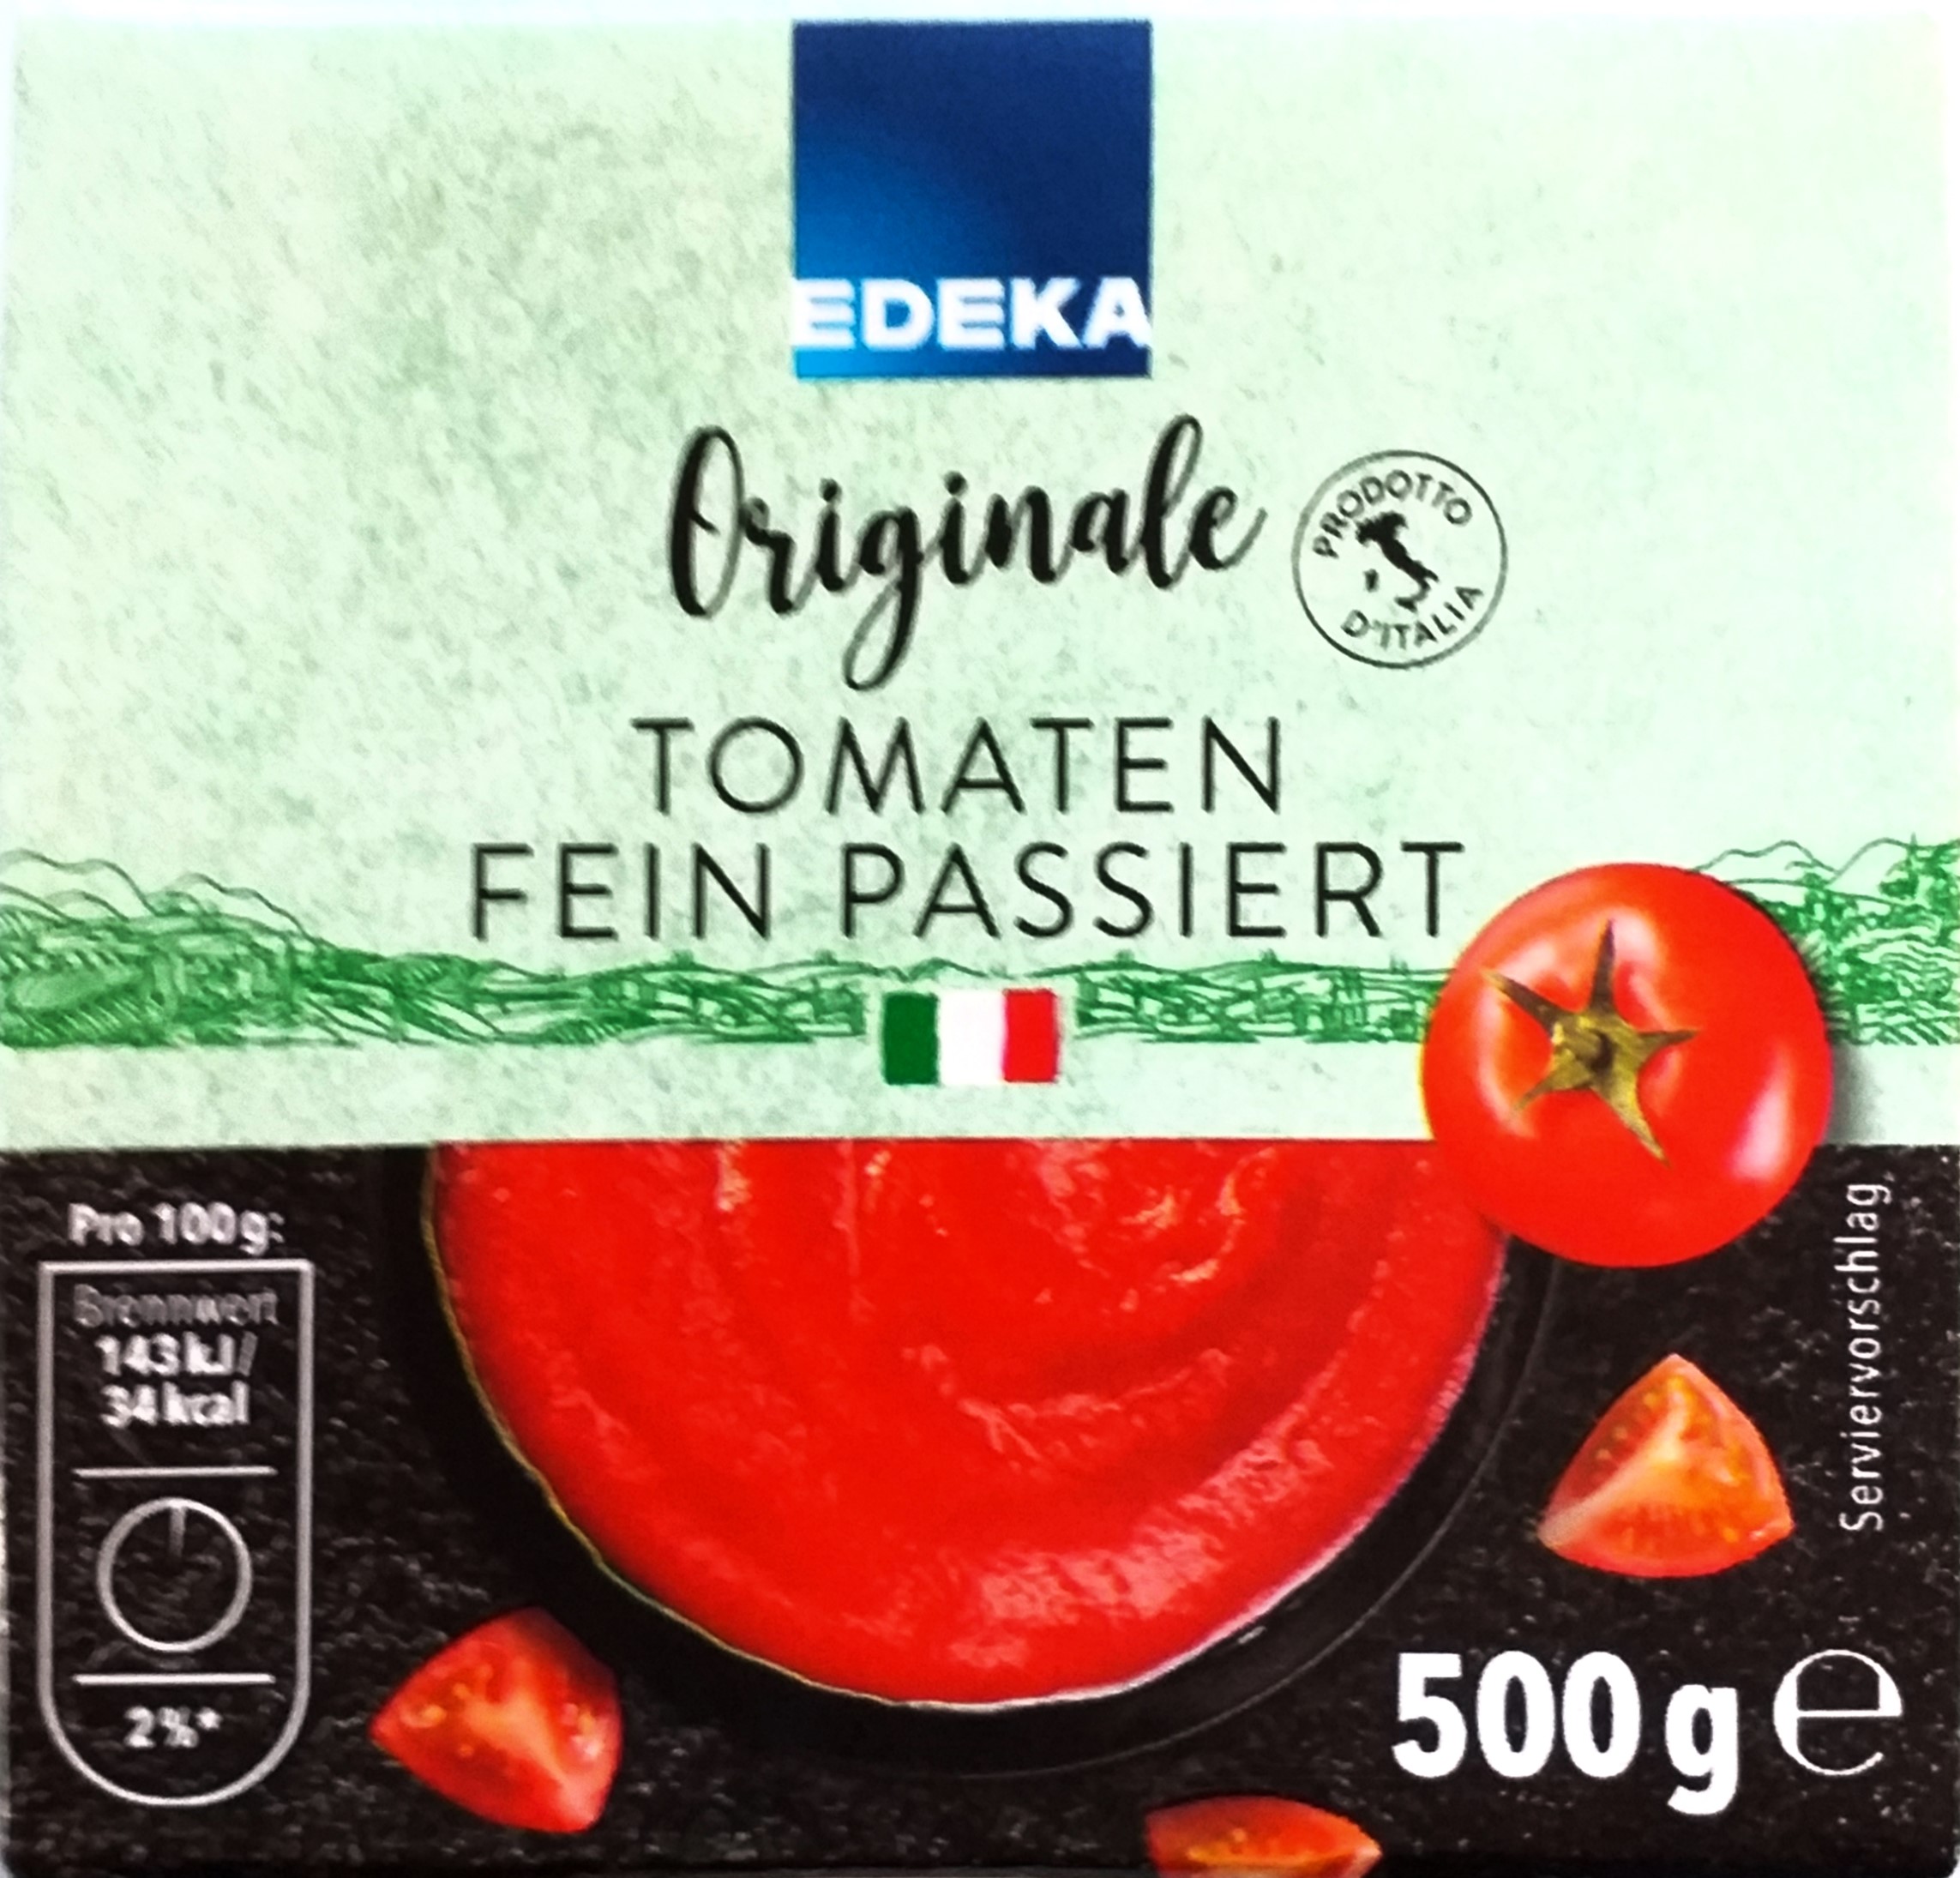 EDEKA Original Tomaten fein passiert 500g